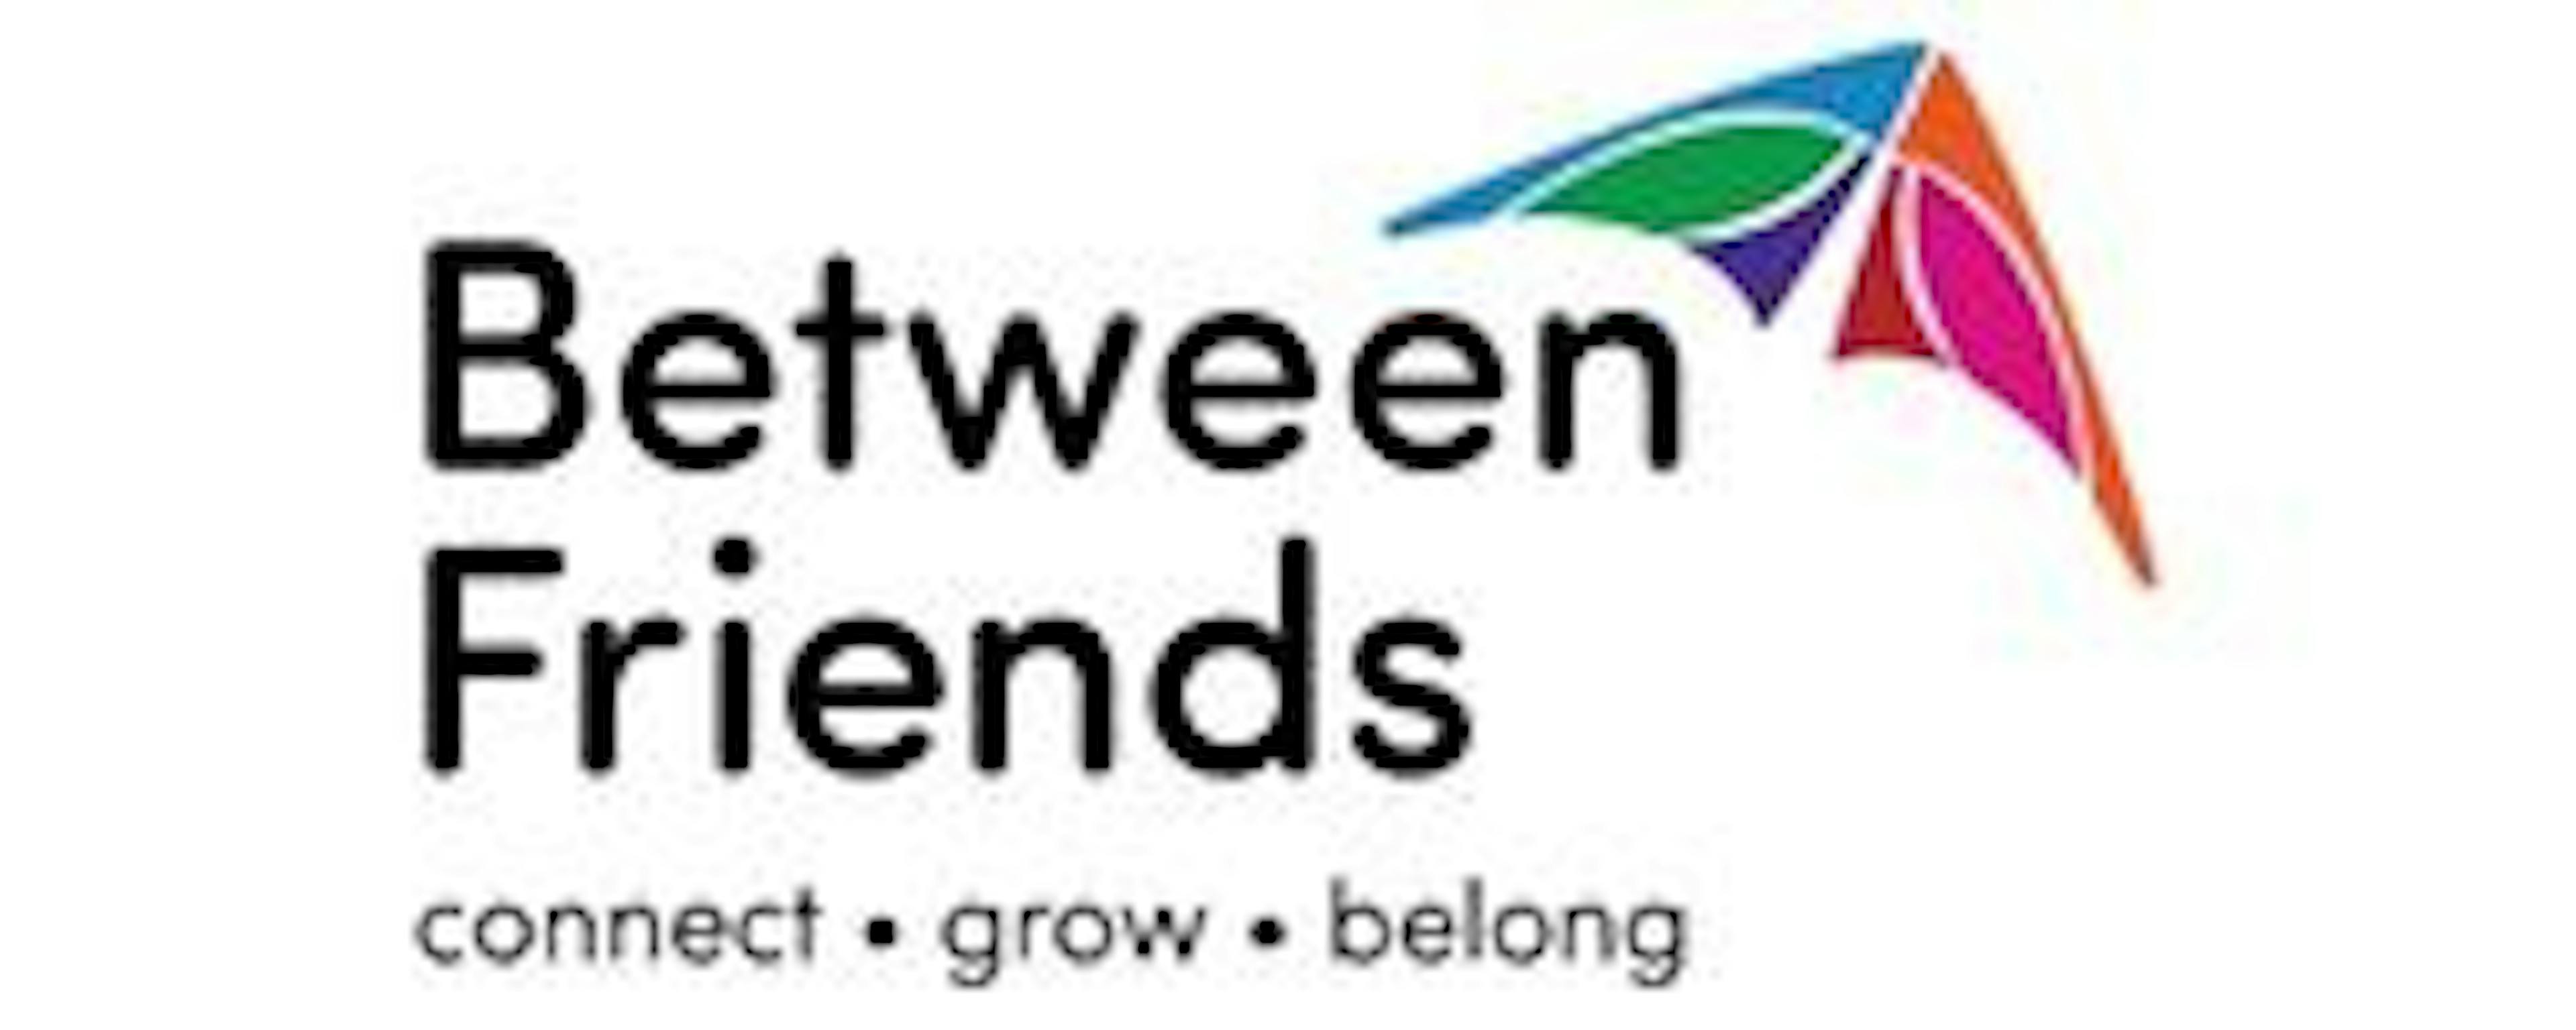 Between Friends logo